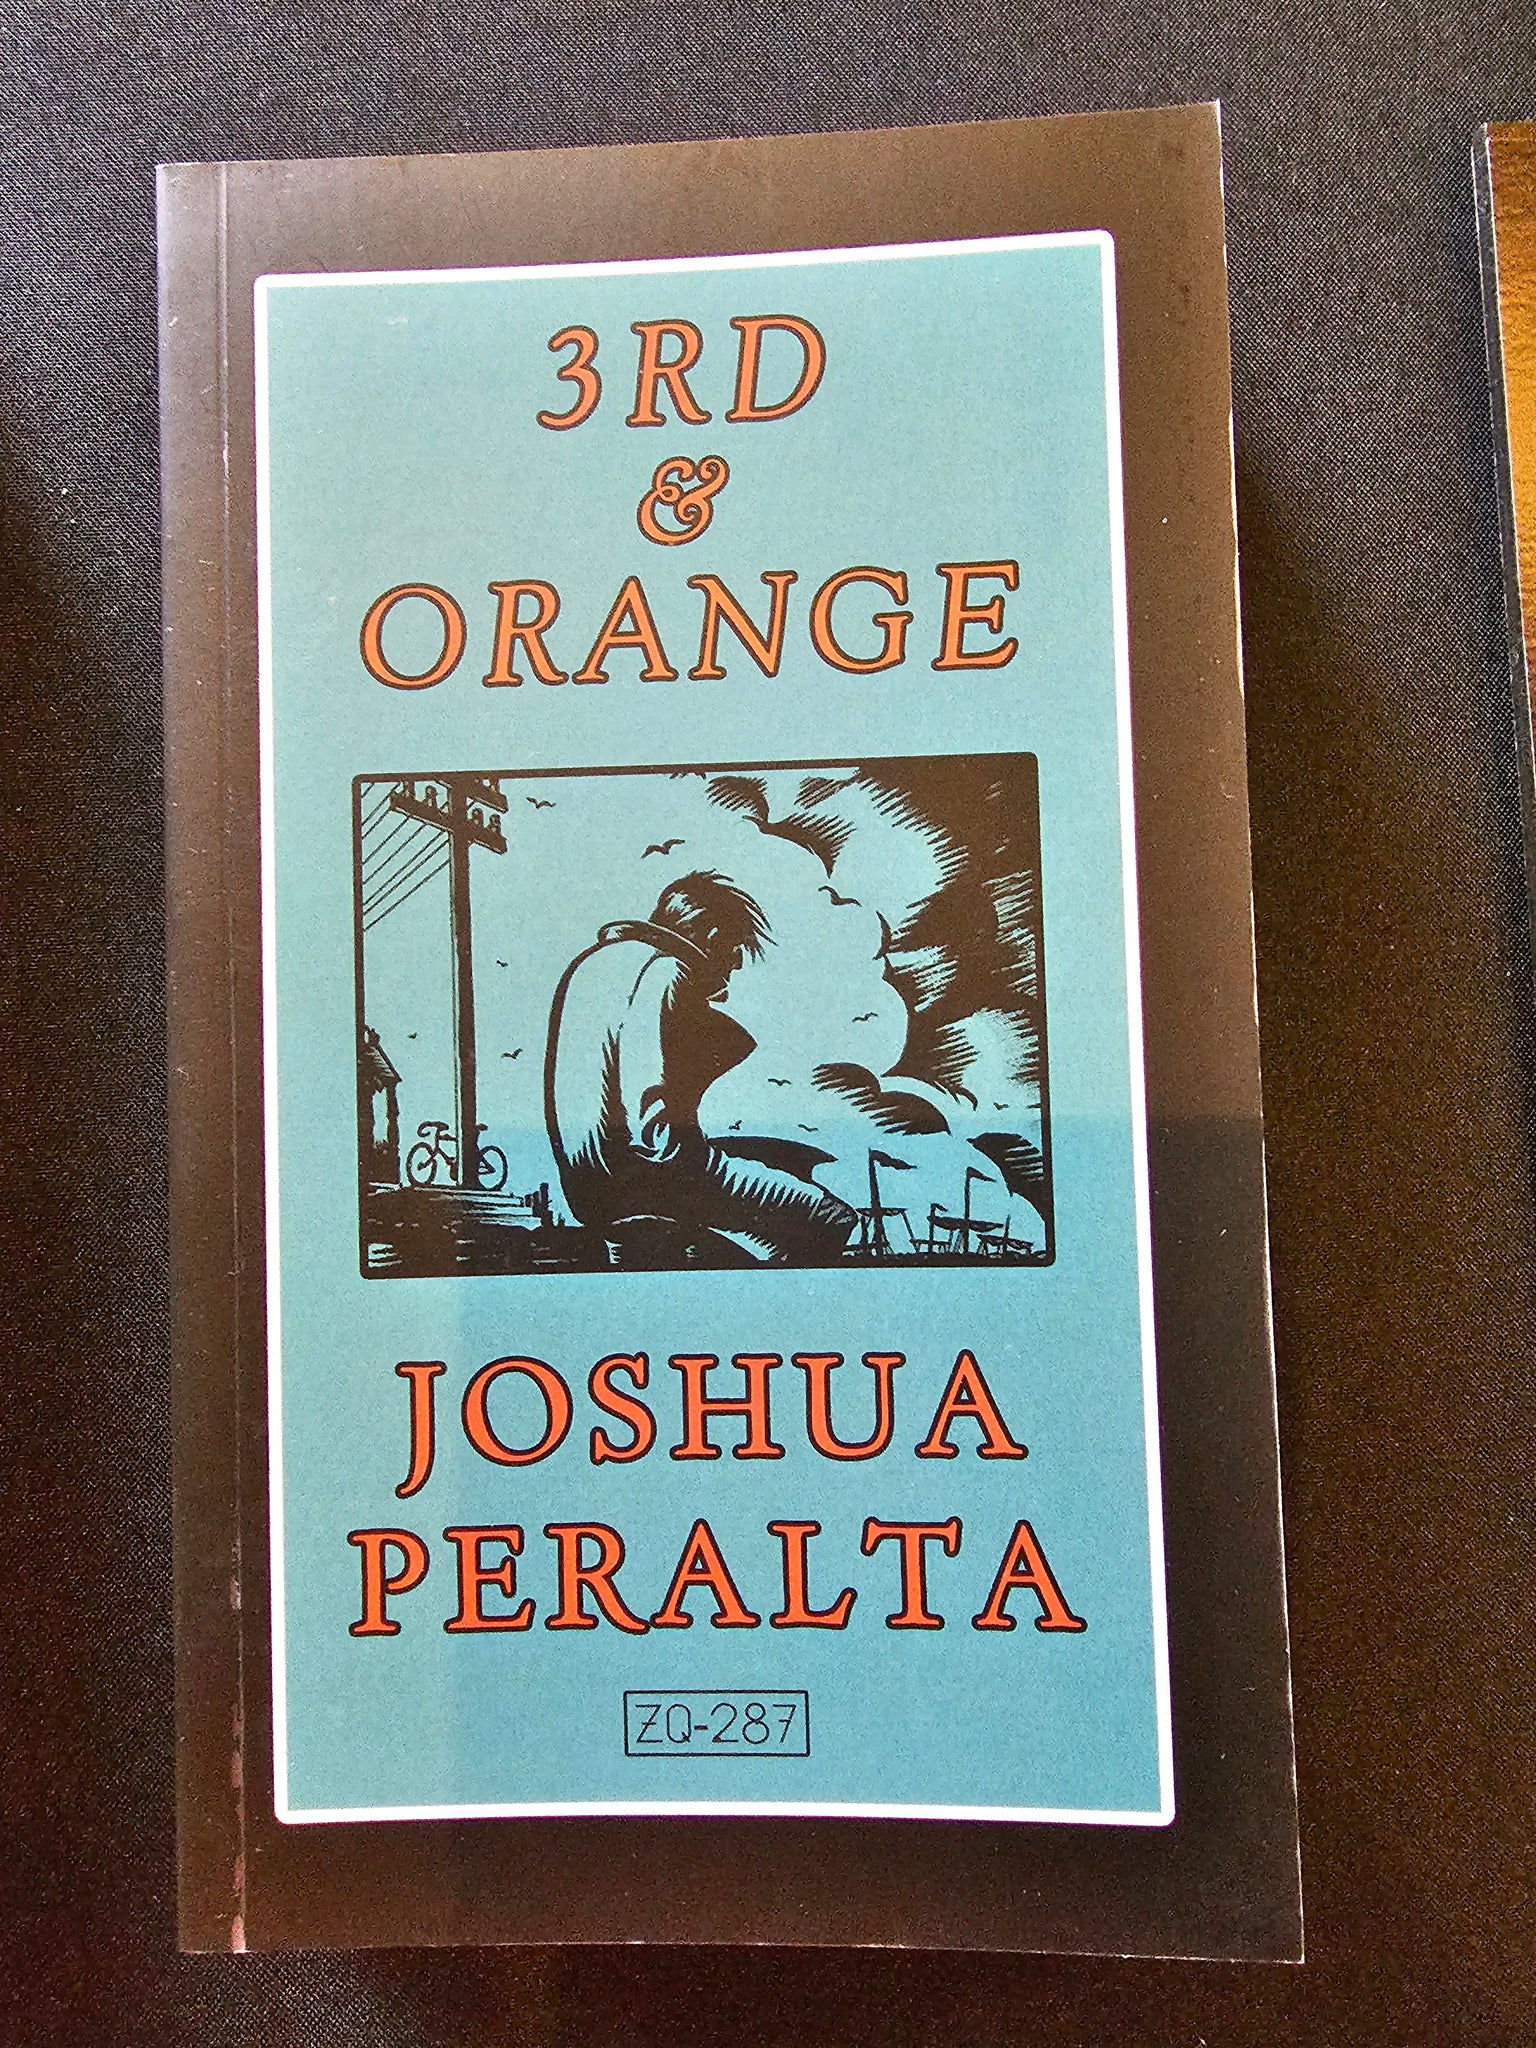 3RD & ORANGE by Joshua Peralta